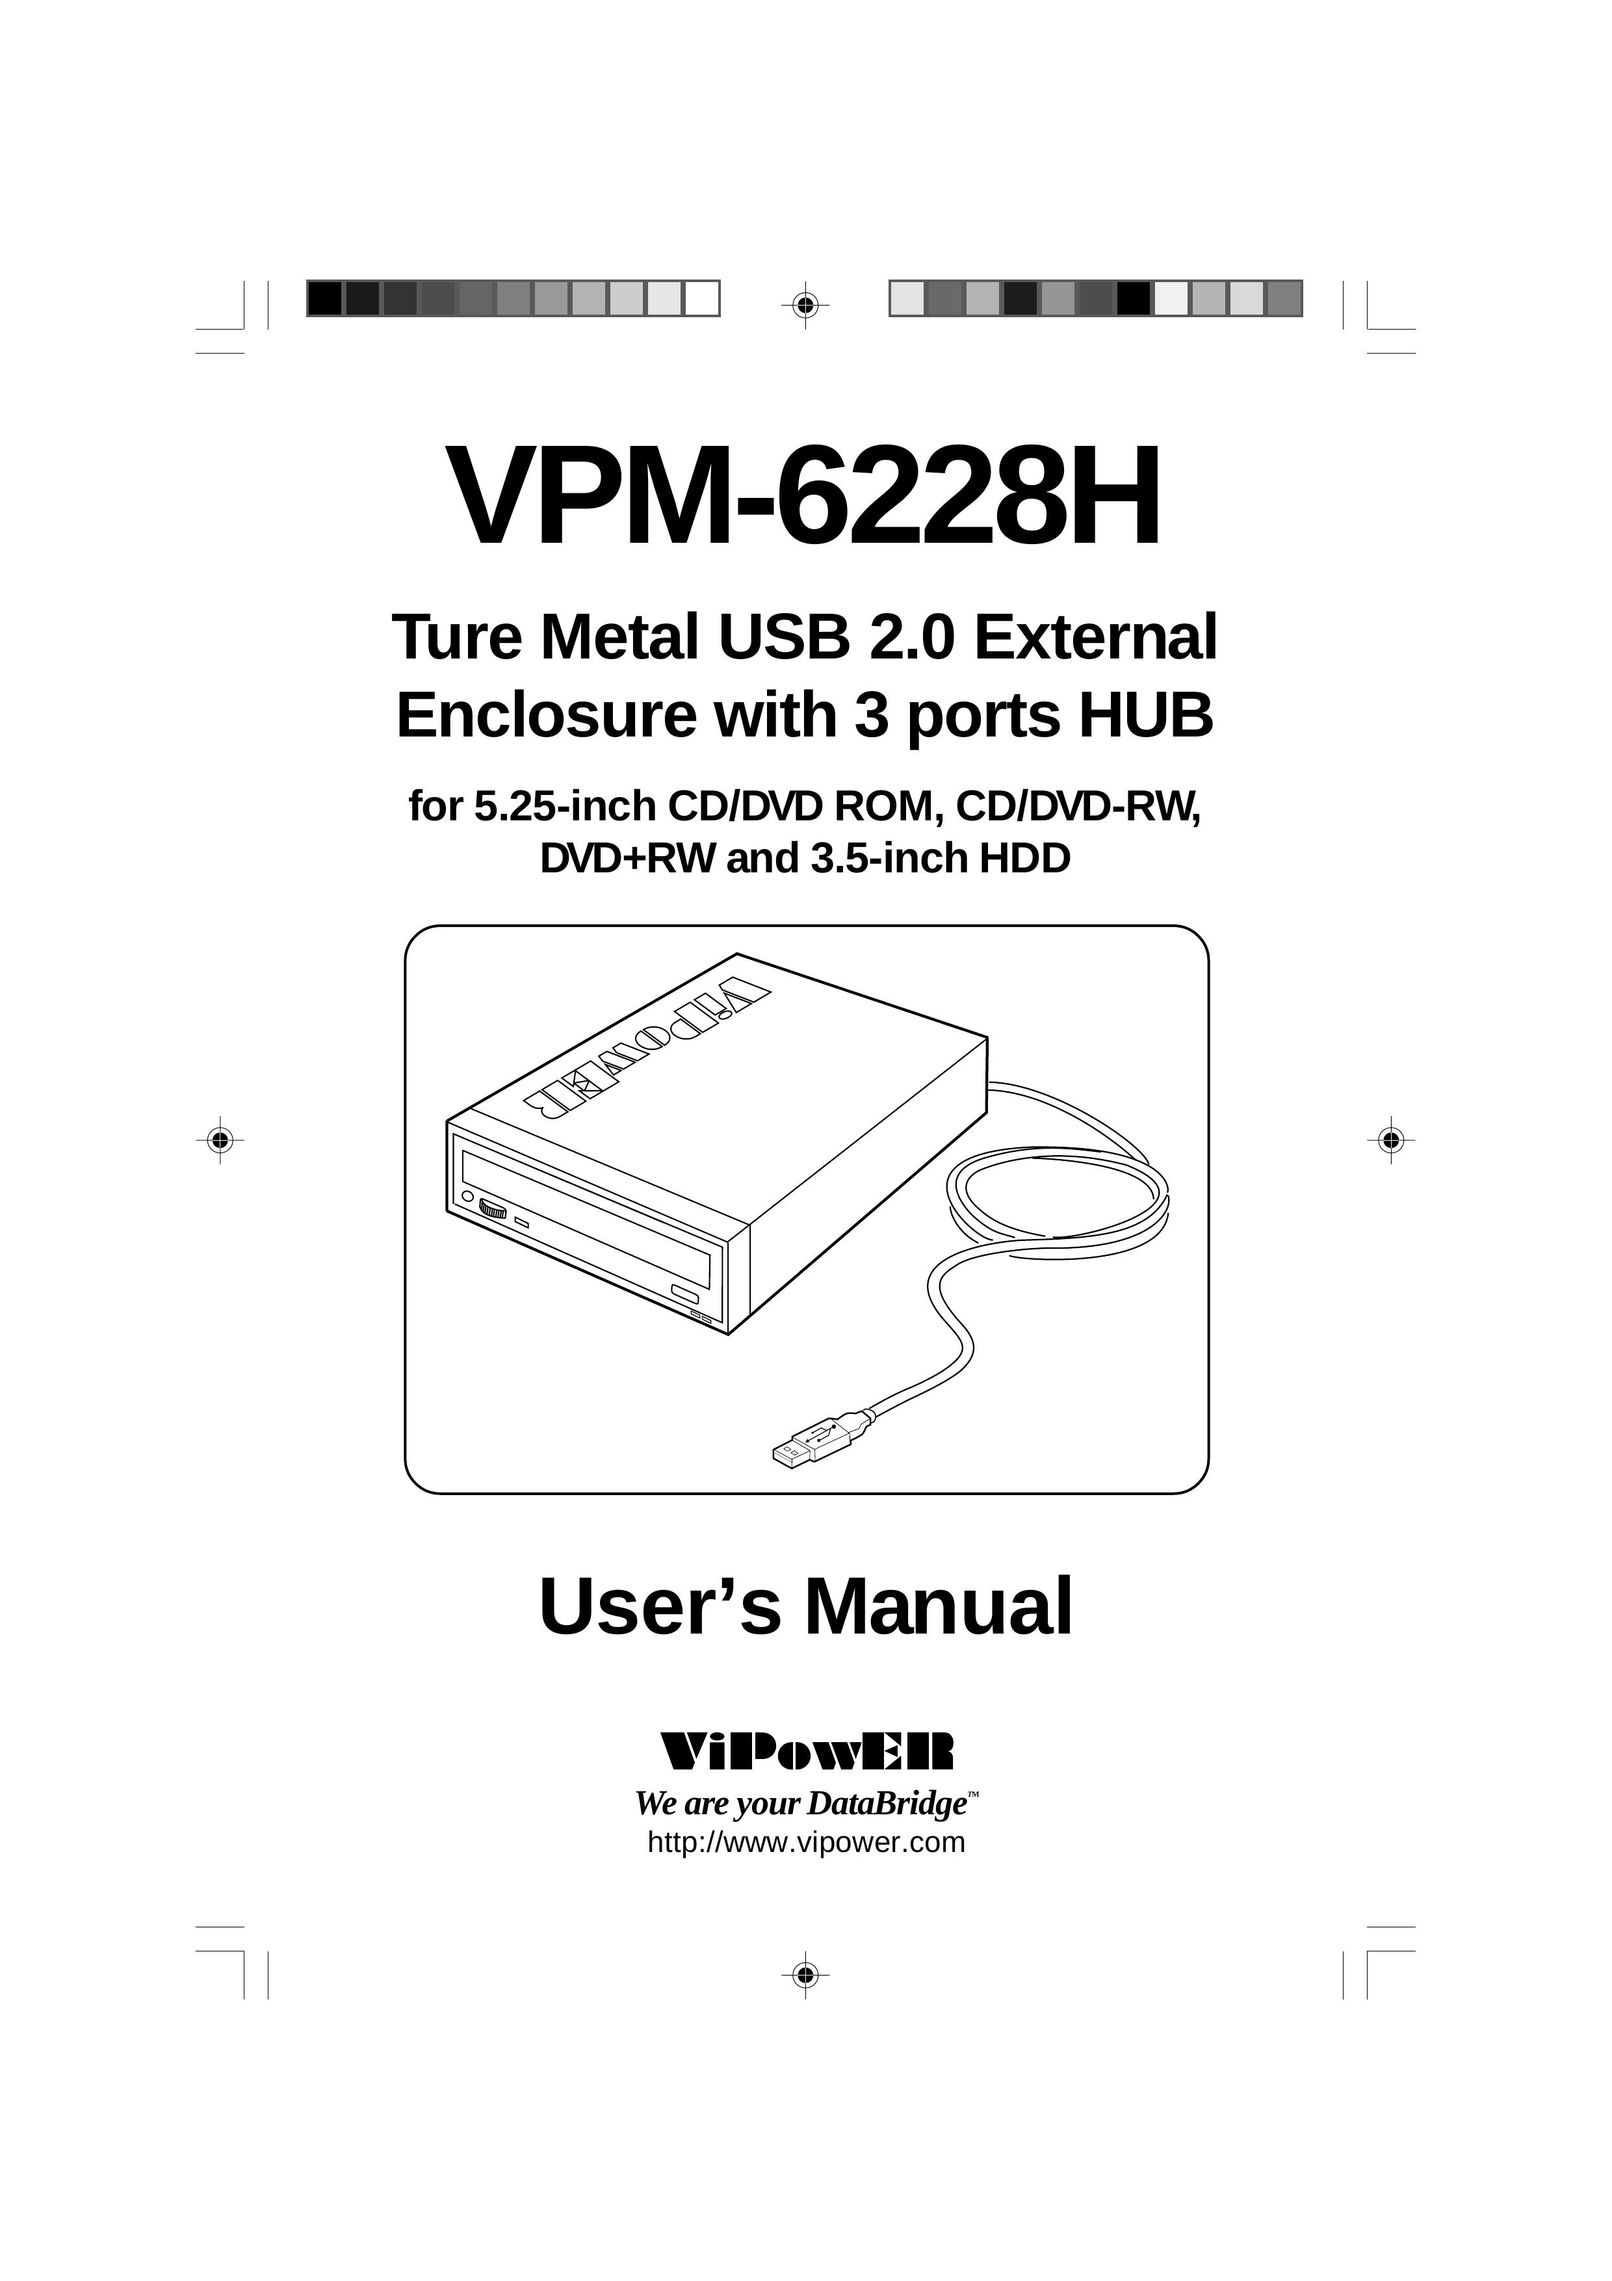 VIPowER VPM-6228H CD Player User Manual